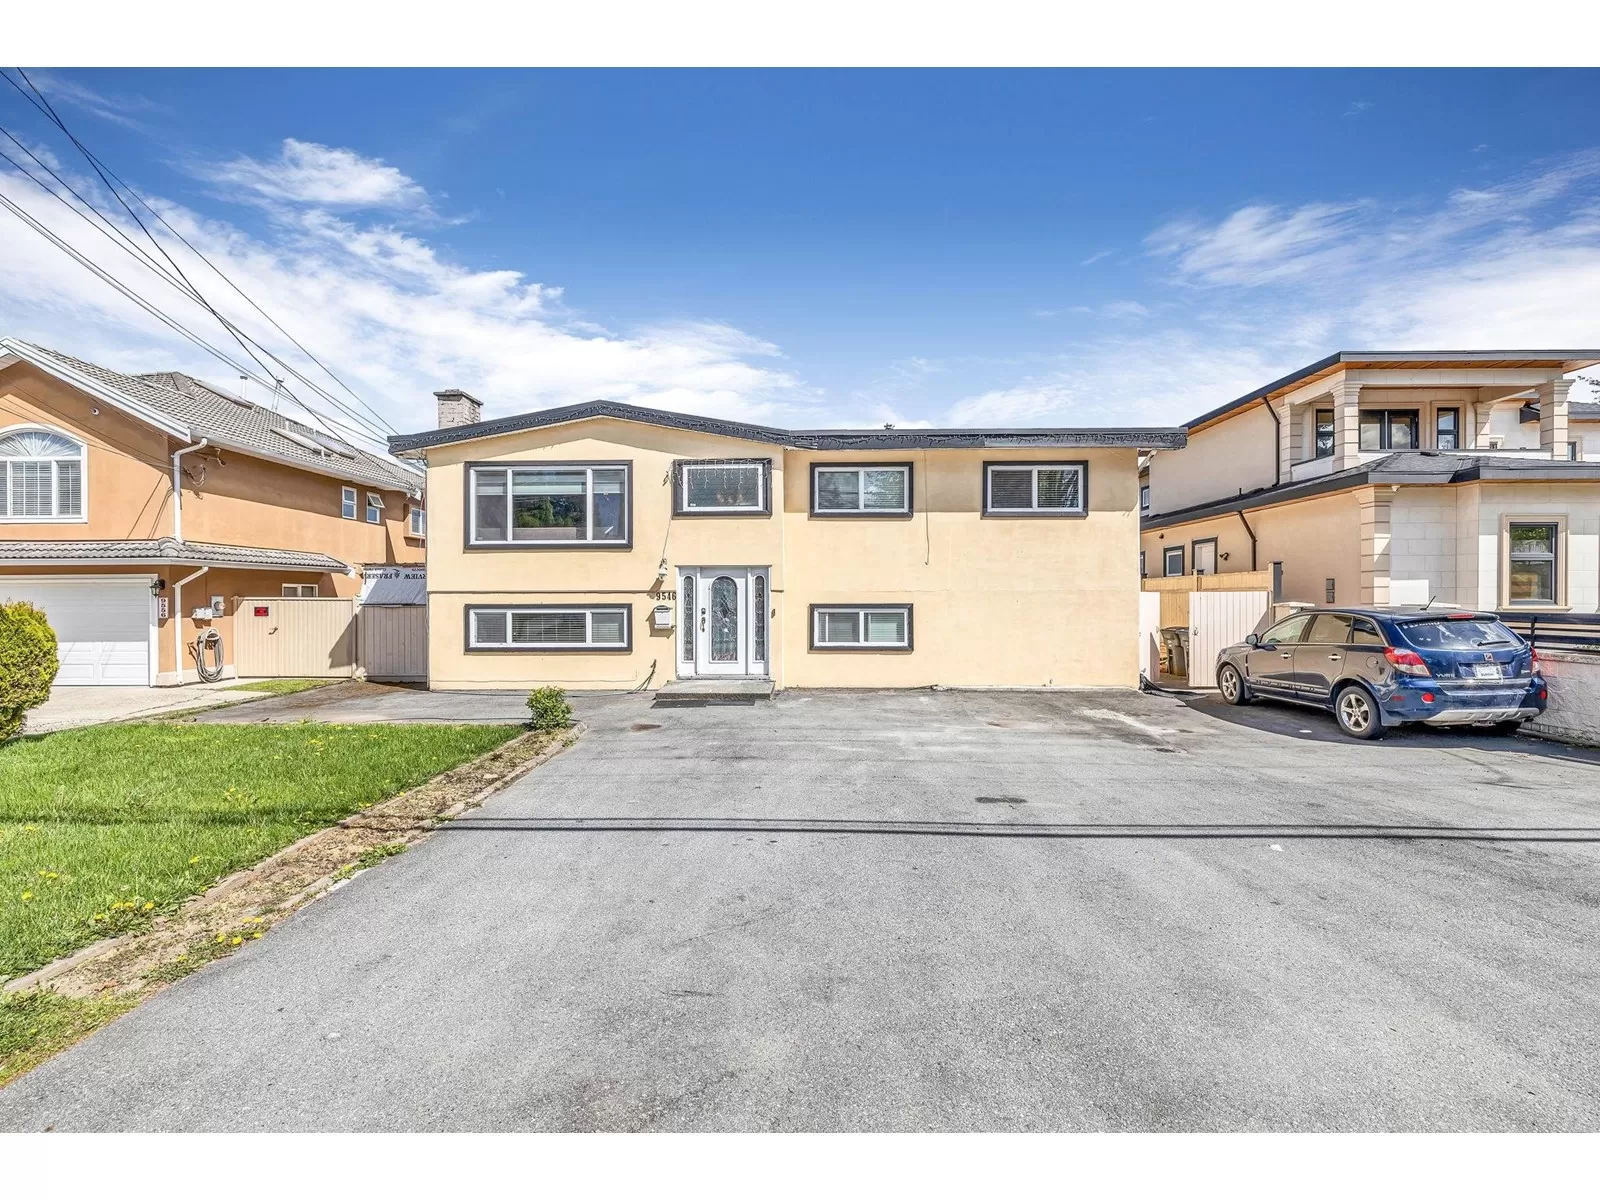 House for rent: 9546 126 Street, Surrey, British Columbia V3V 5C8